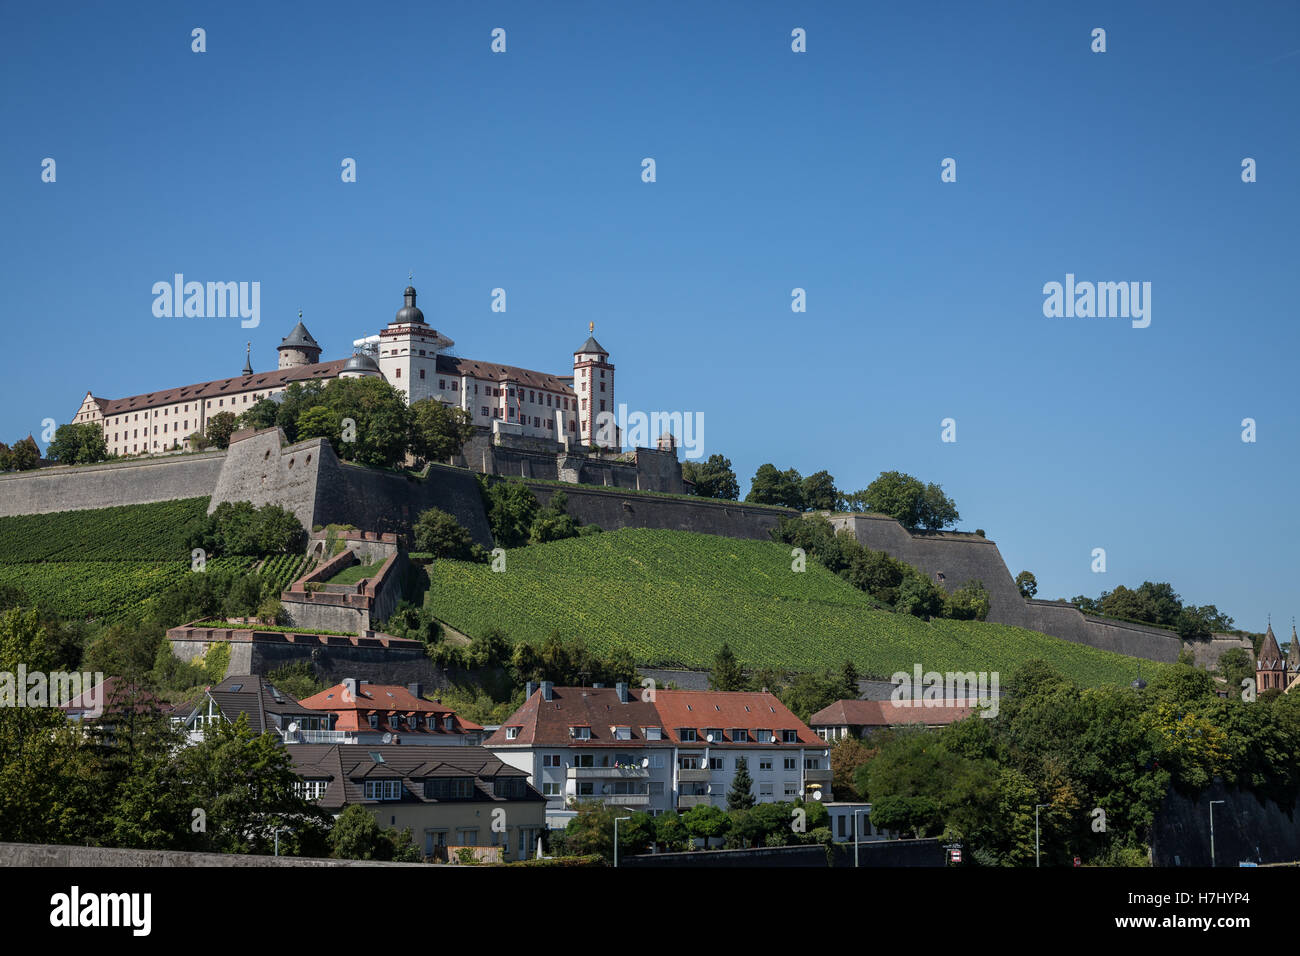 Festung Marienberg, Würzburg, Germany, Europe. Stock Photo